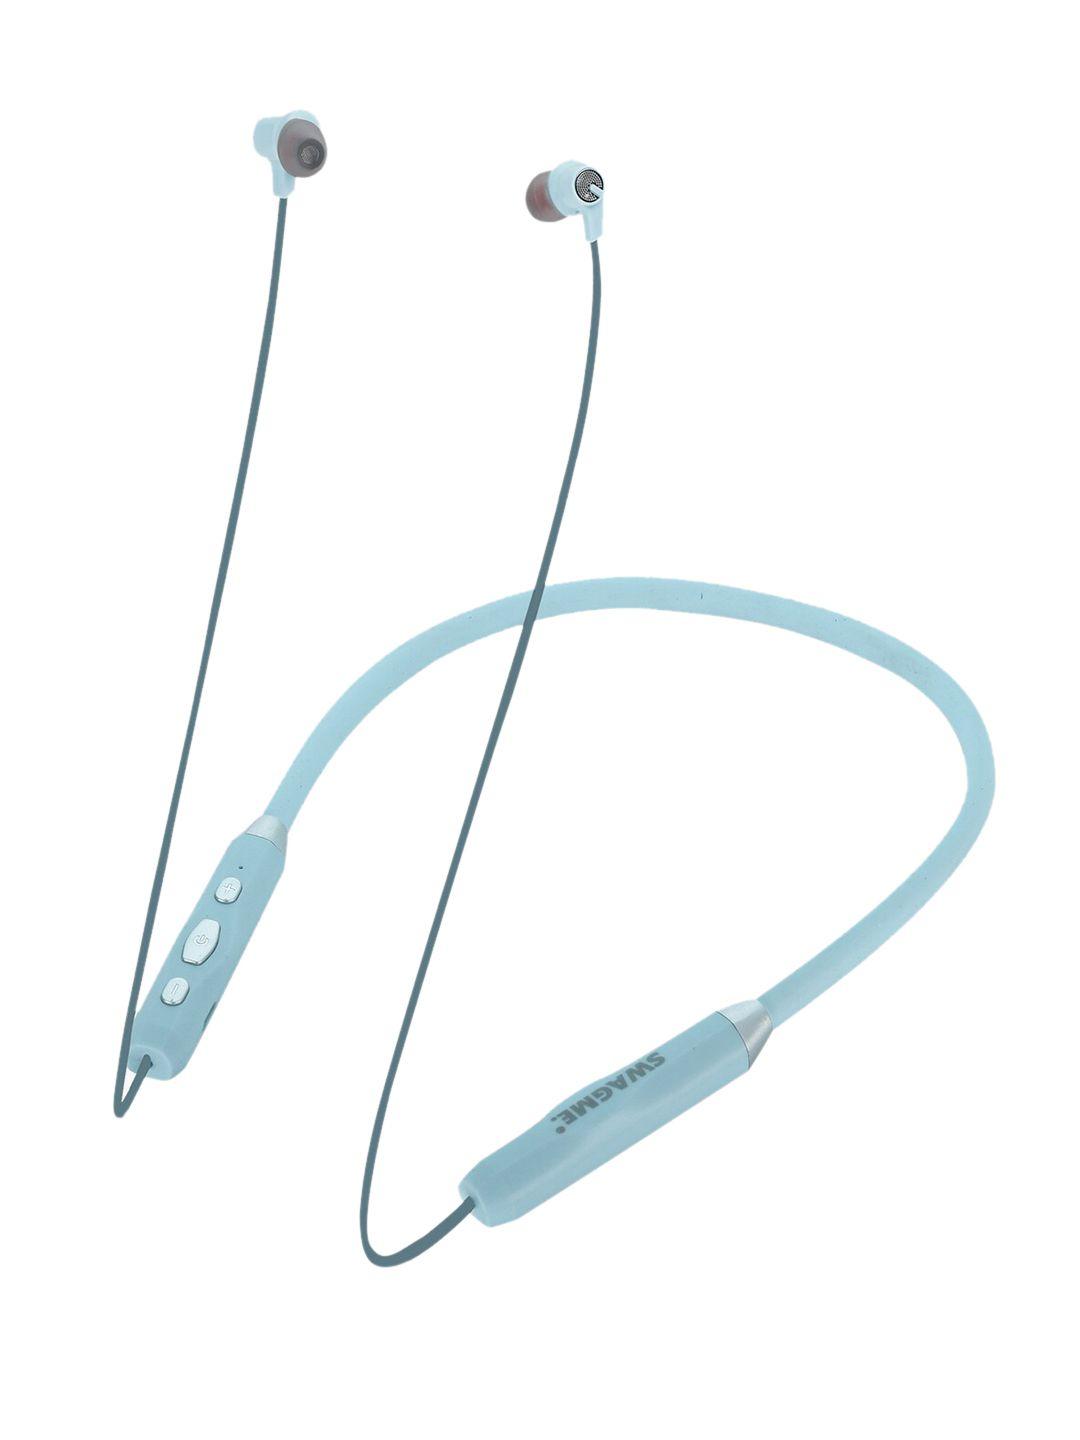 swagme blue wireless flexible neckband headphones